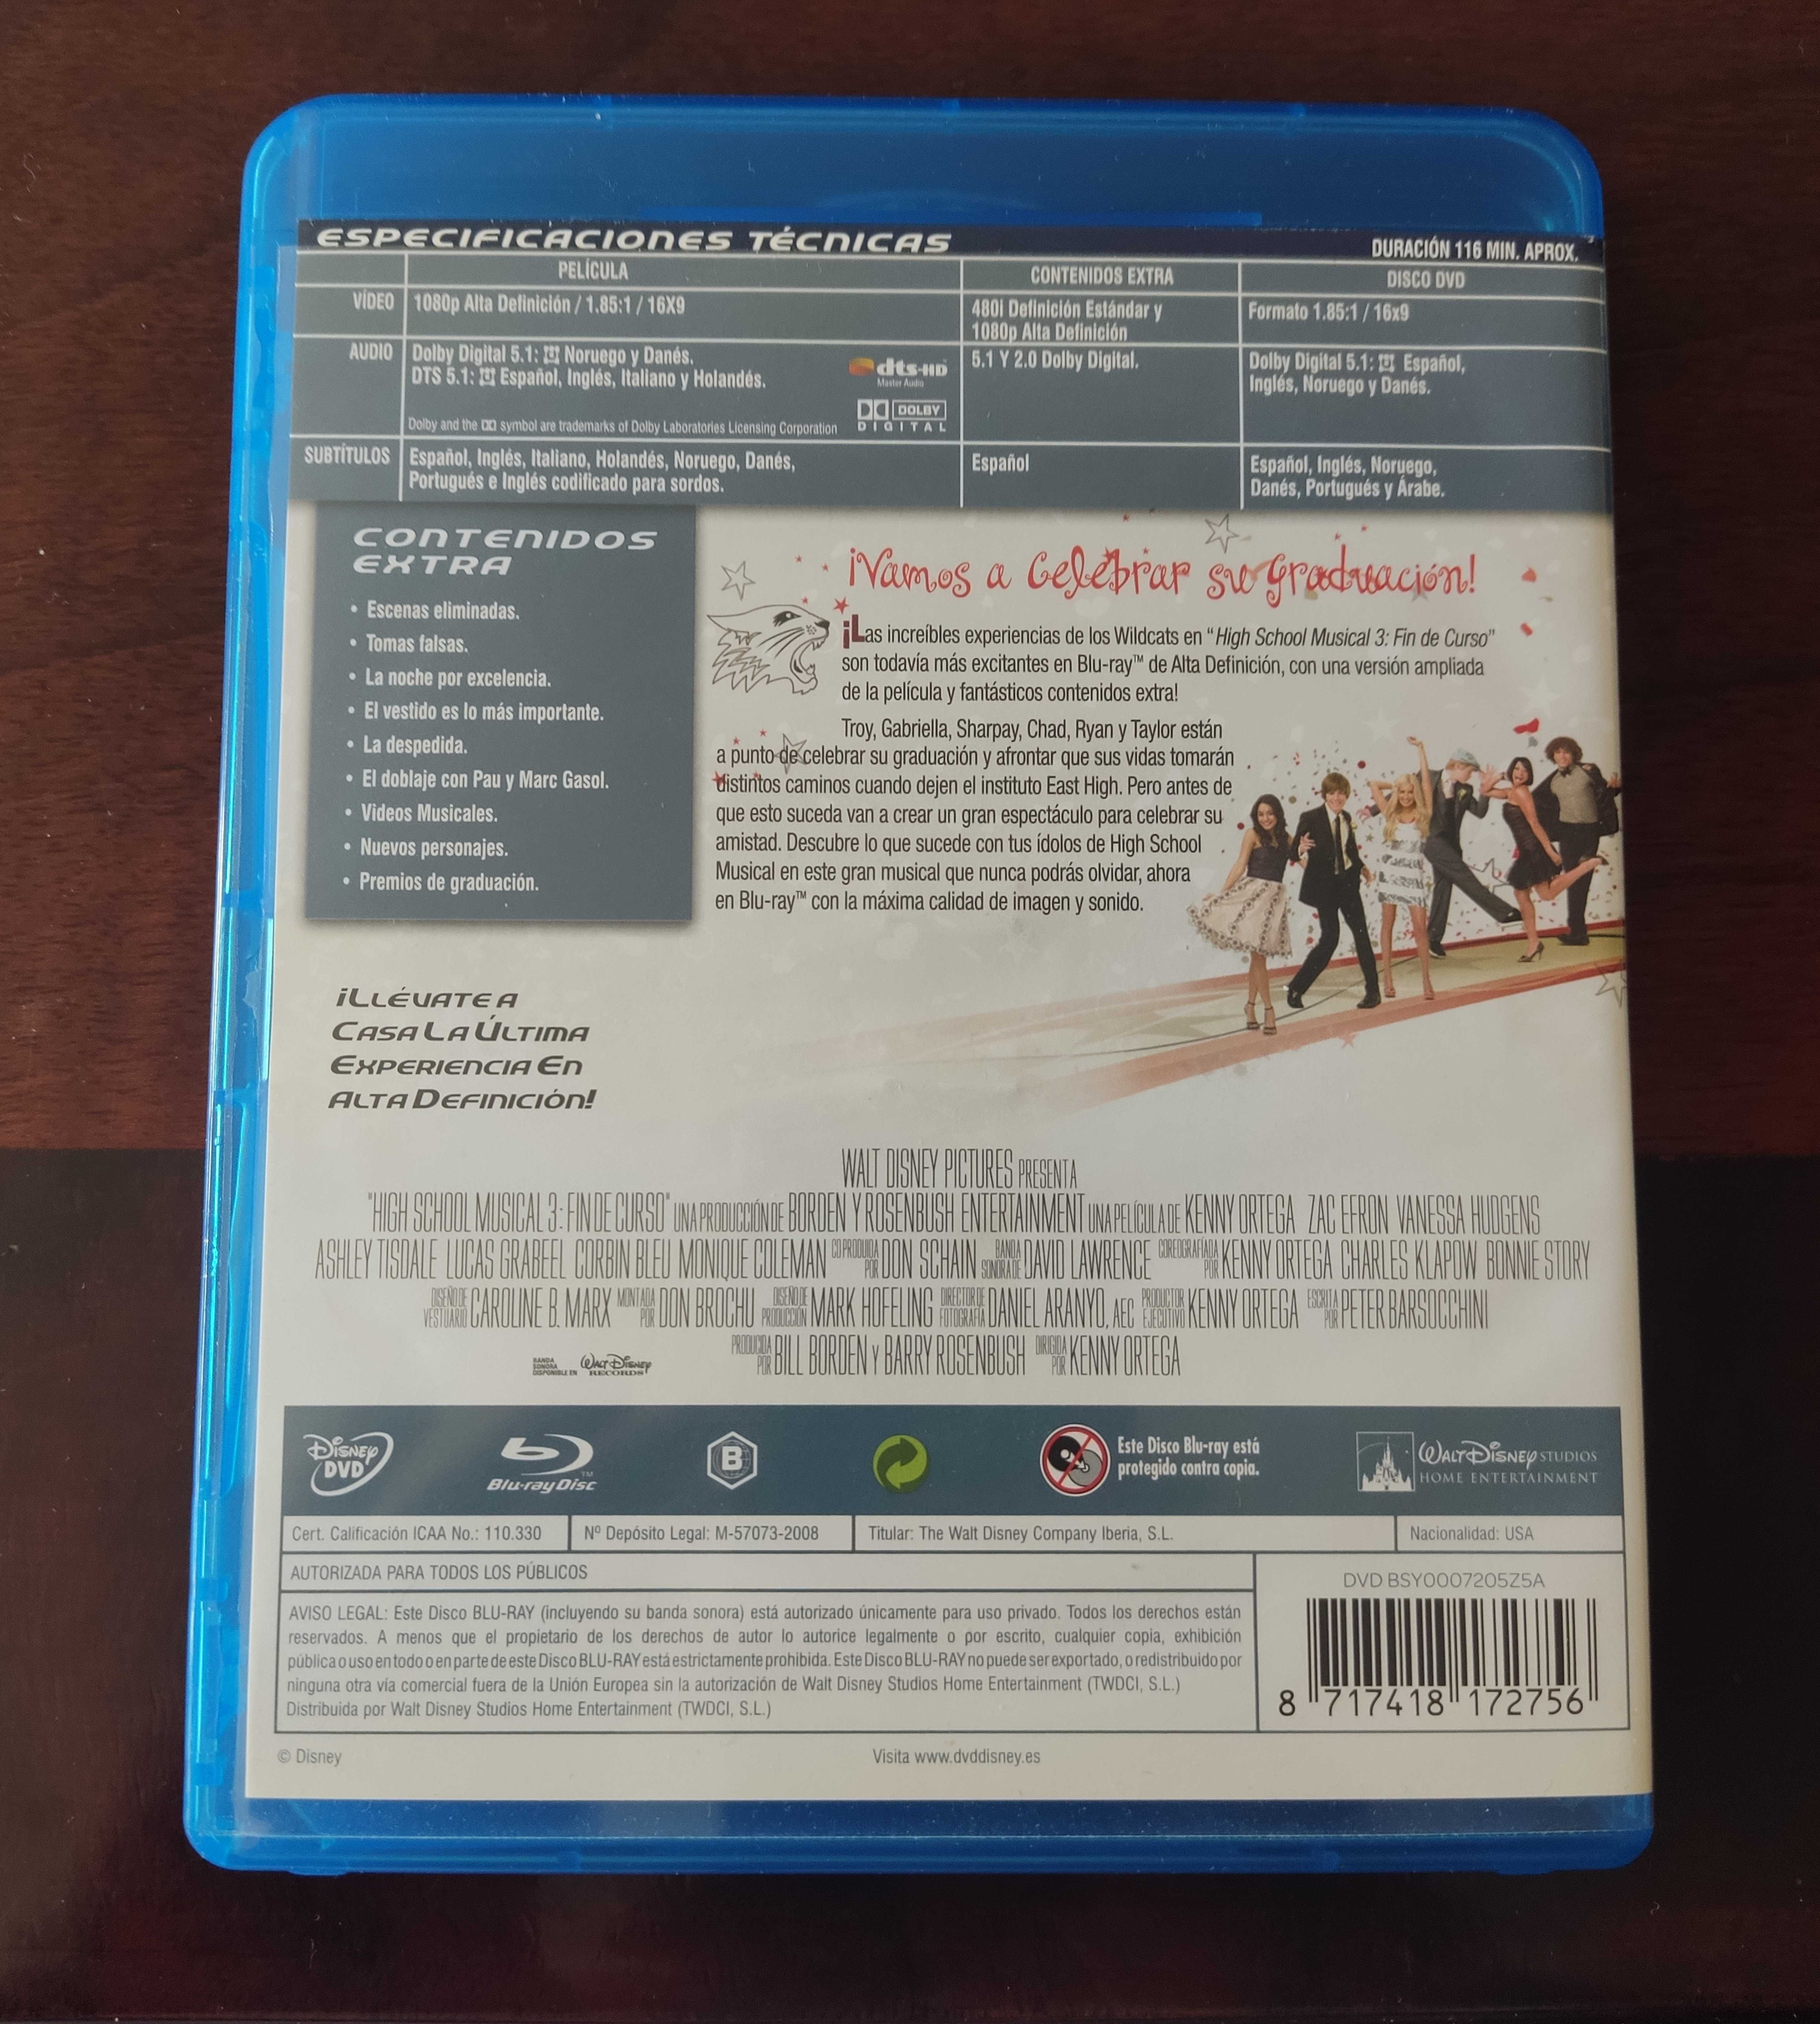 High School Musical 3 - Edição Ampliada - 2 Blu-Ray